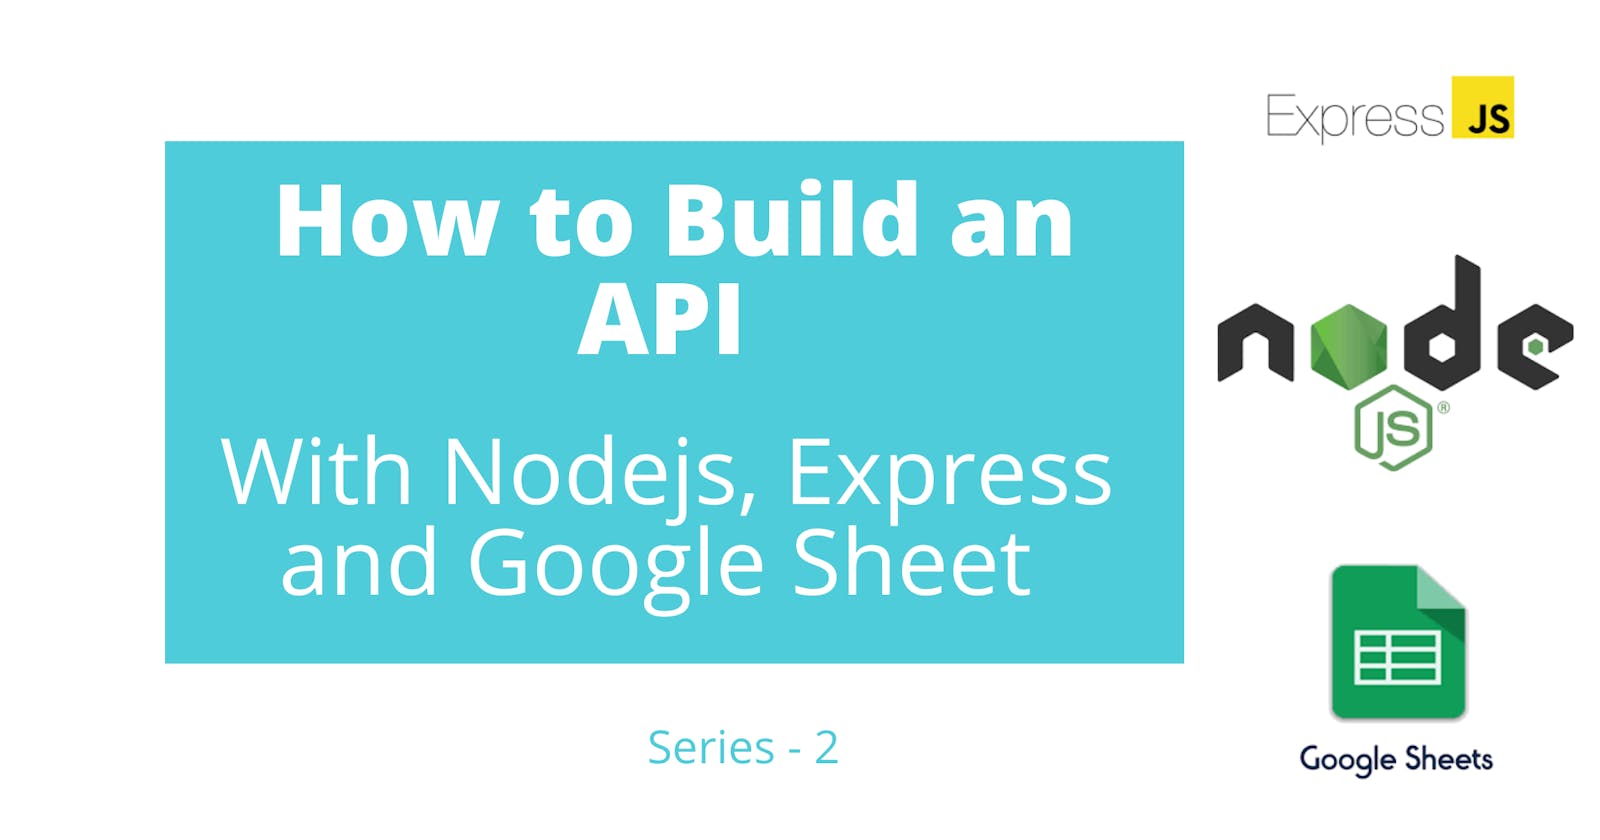 How to Build an API With Nodejs, Expressjs and Google Sheet - Series 2